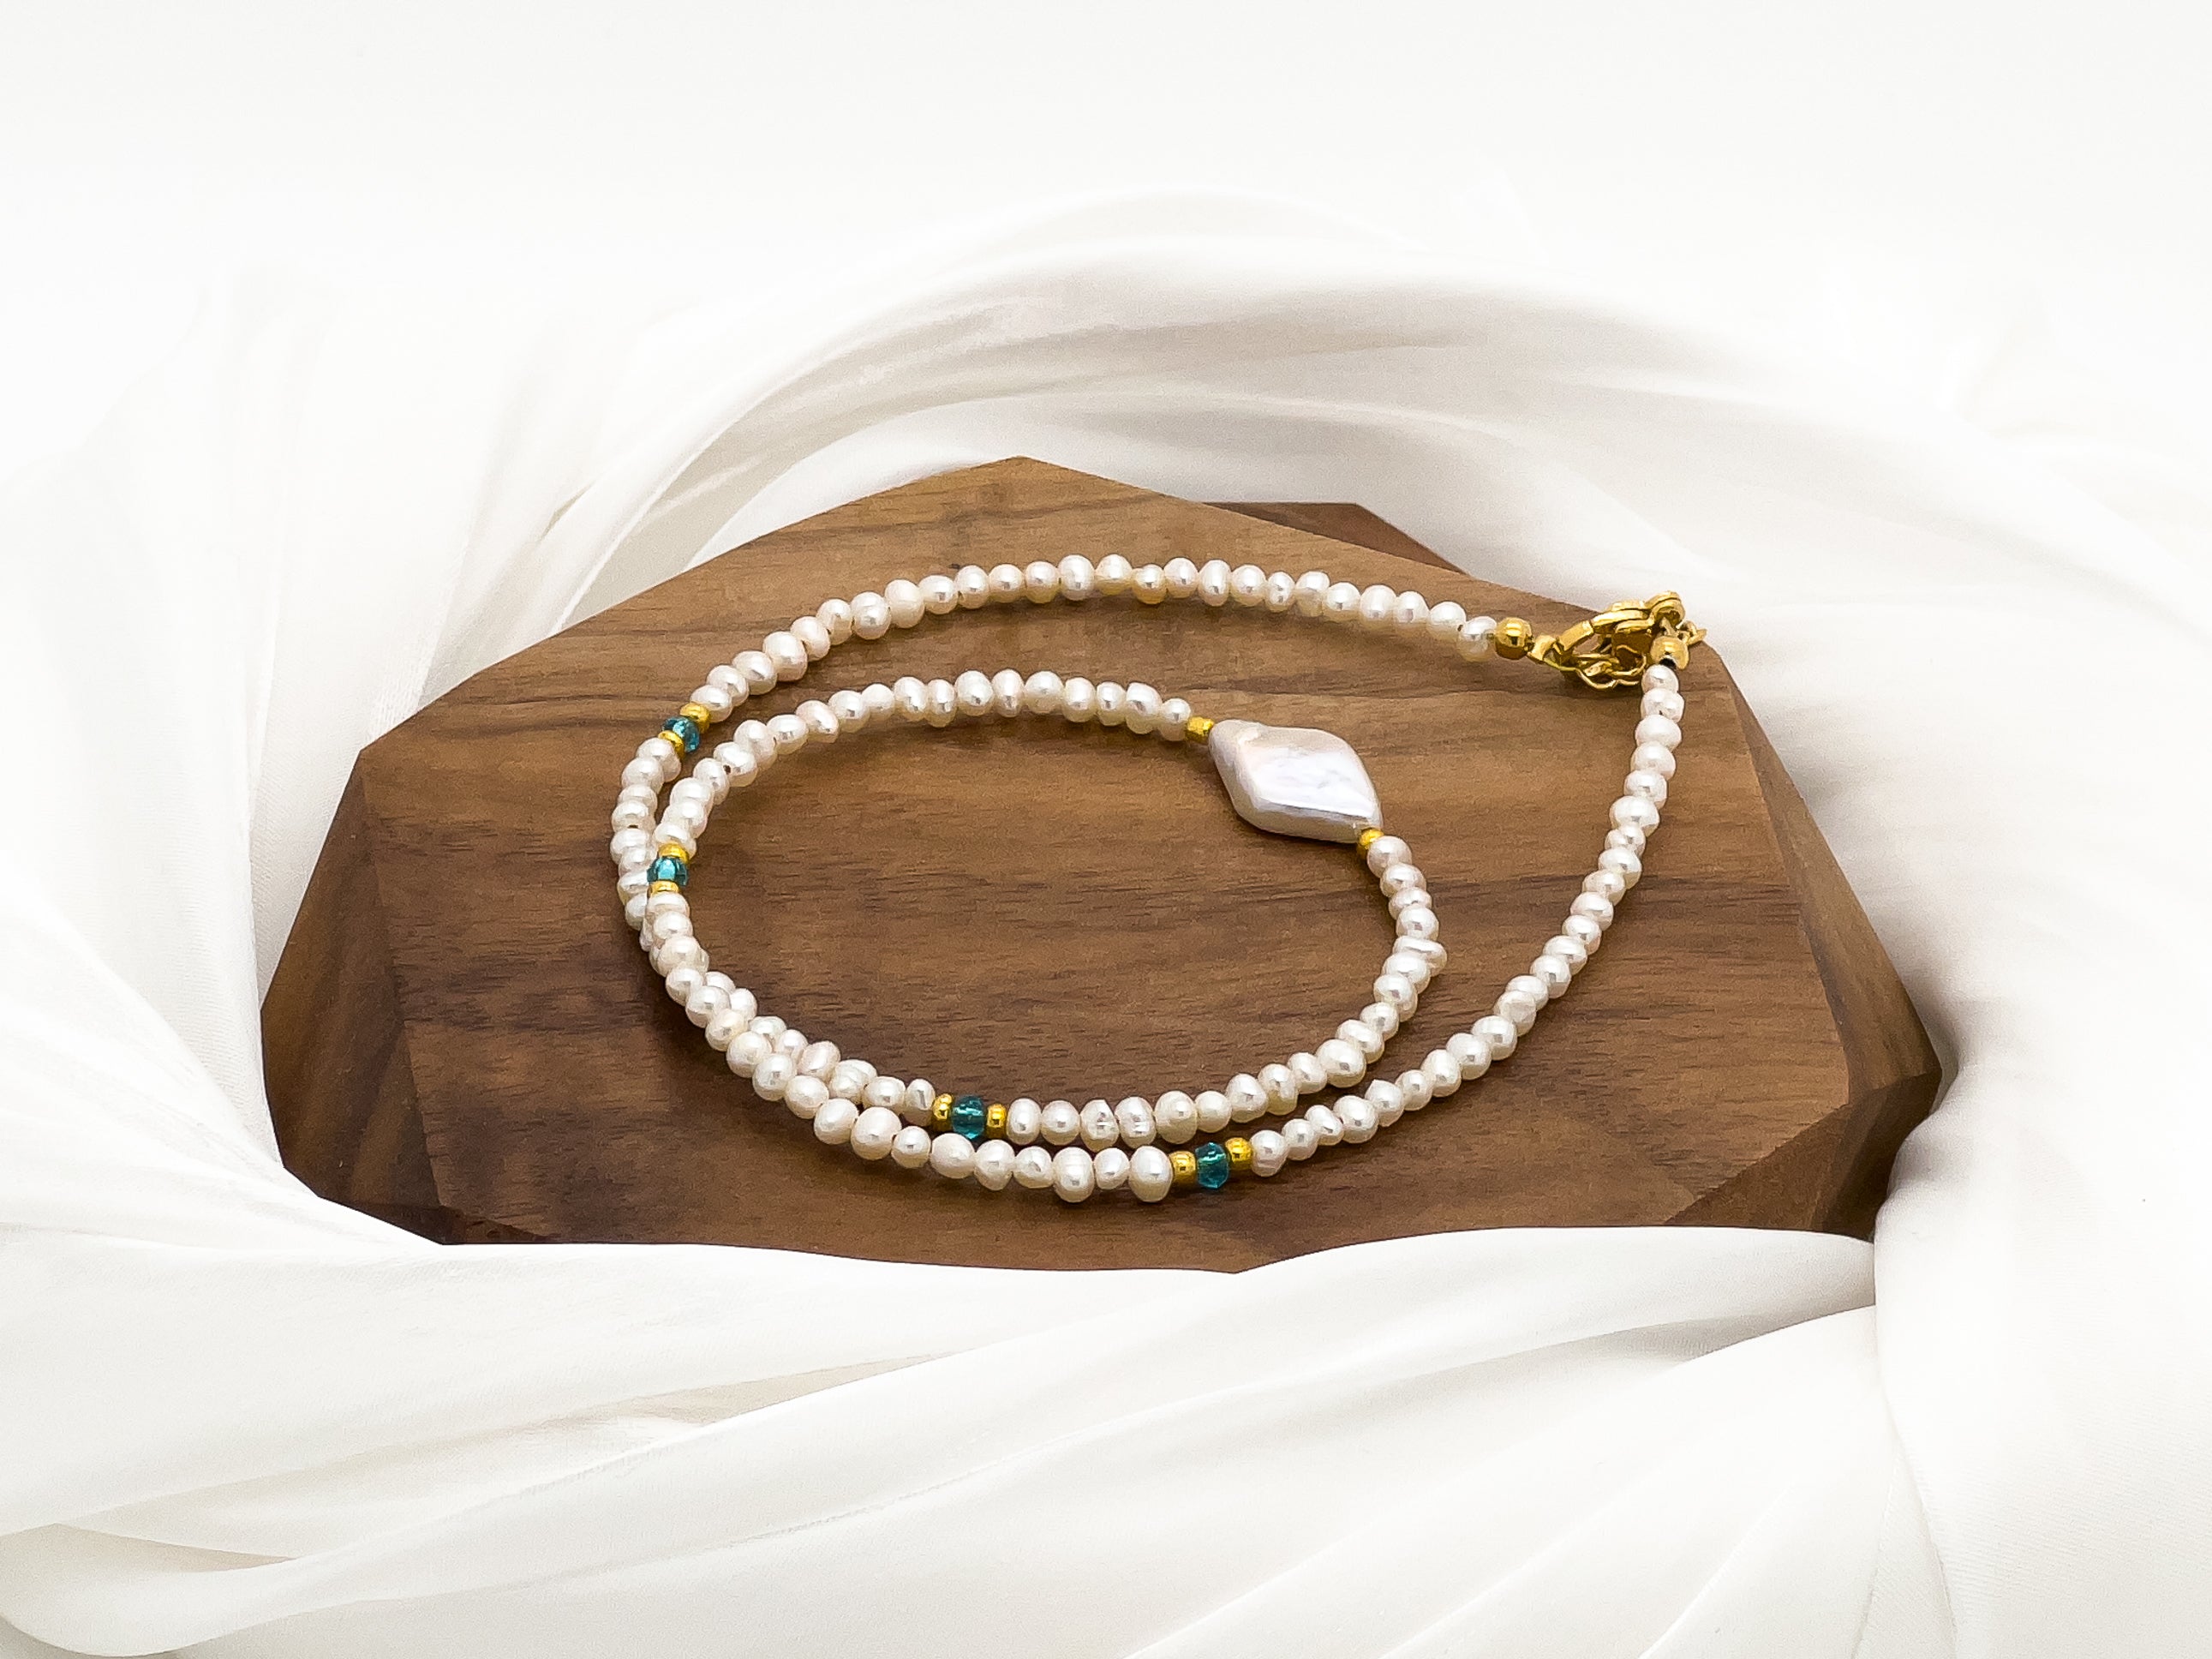 Jasmine Pearl Gem Choker Necklace - Everyday Jewelry | Chic Chic Bon